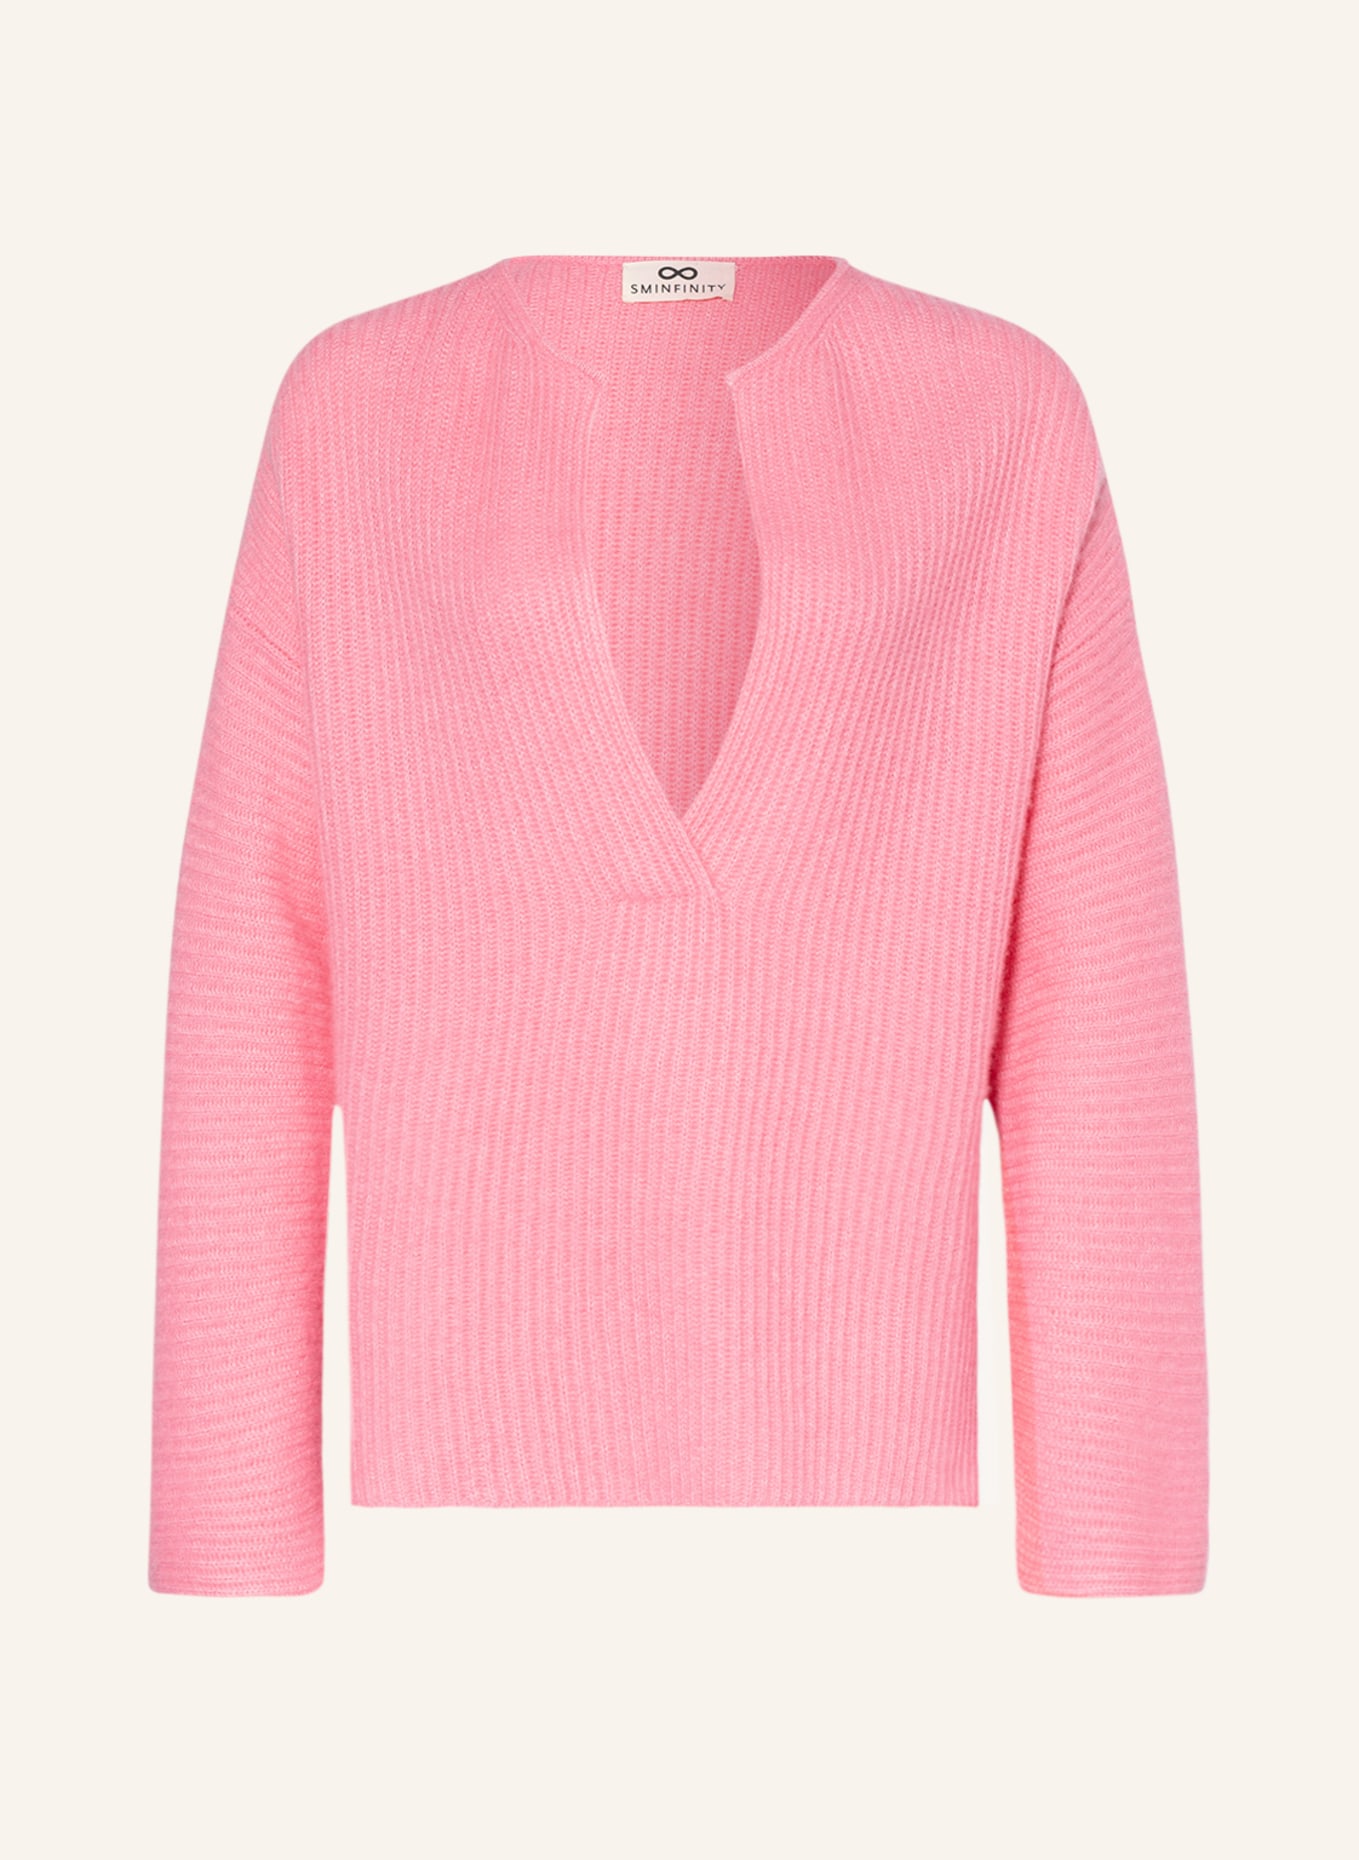 SMINFINITY Cashmere-Pullover, Farbe: PINK (Bild 1)